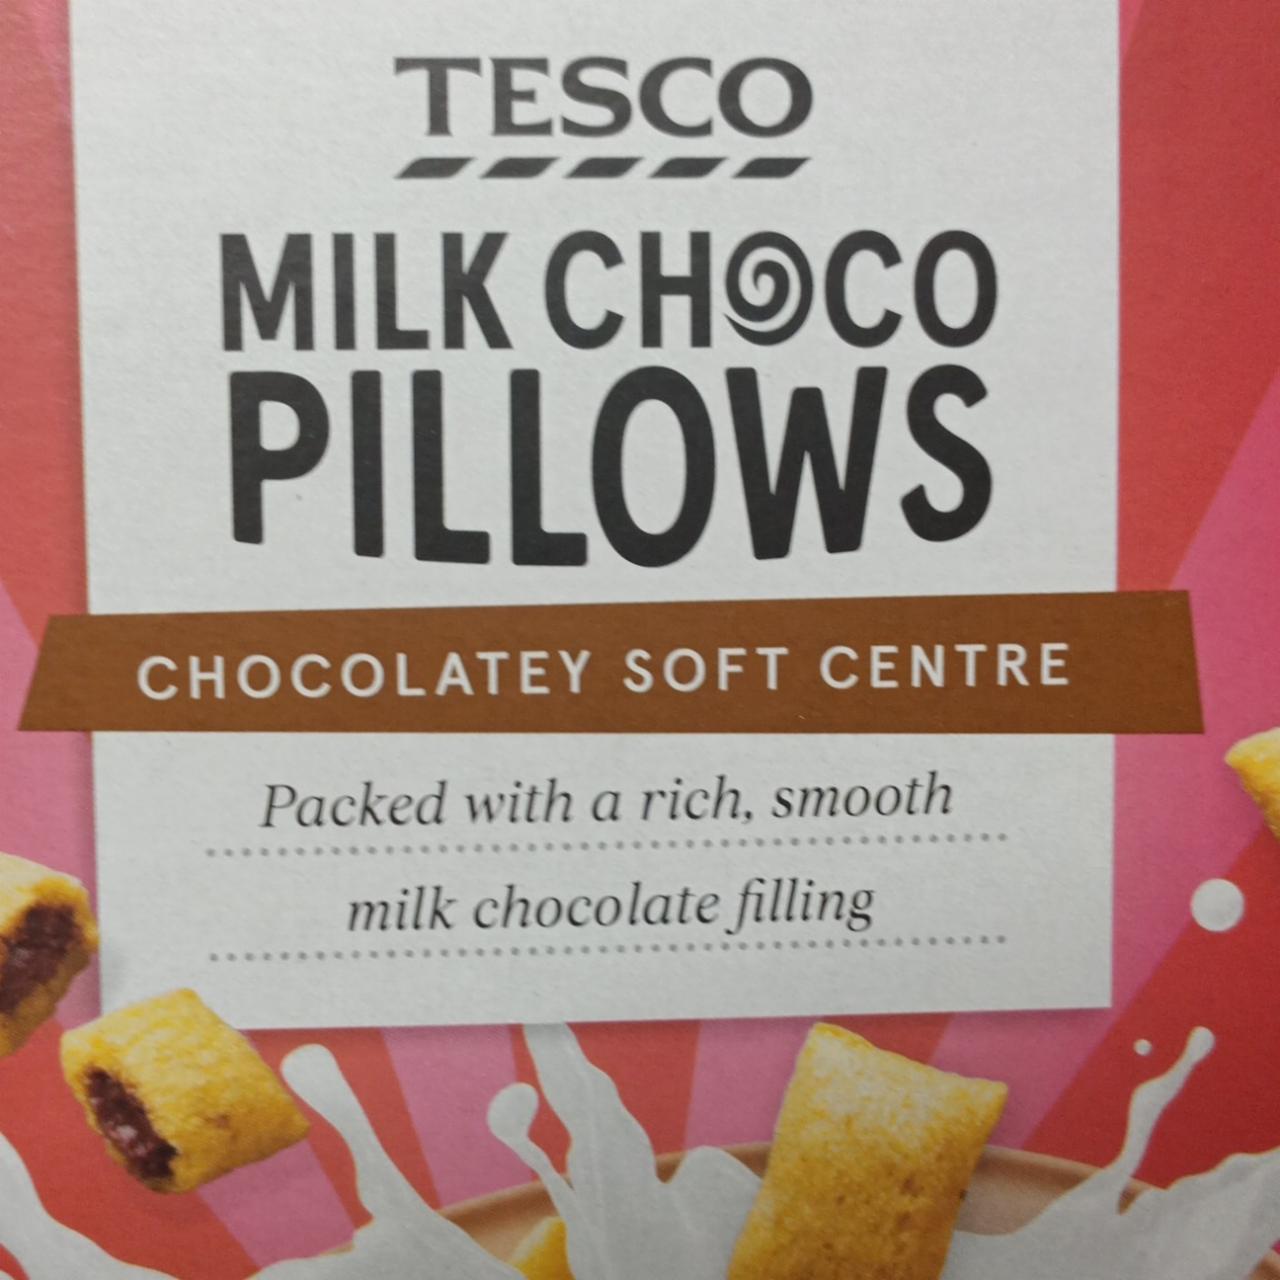 Fotografie - Milk Choco pillows Chocolatey soft centre Tesco